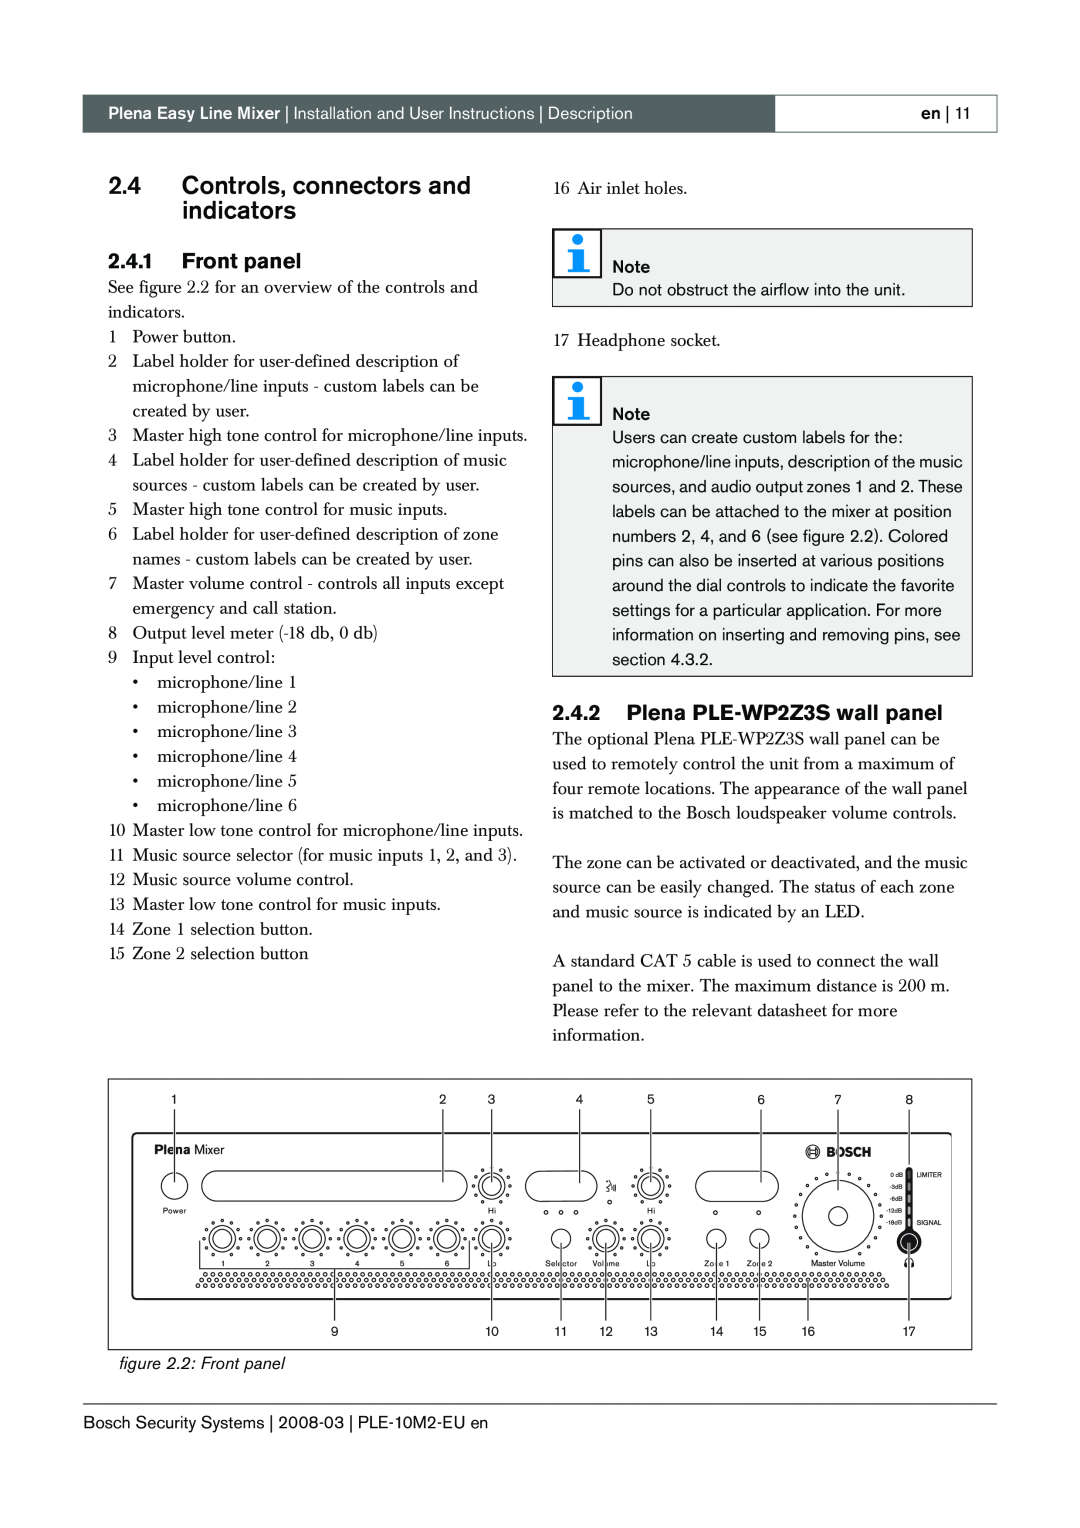 Bosch Appliances PLE-10M2-EU 2.4Controls, connectors and indicators, 2.4.1Front panel, 2.4.2Plena PLE-WP2Z3Swall panel 